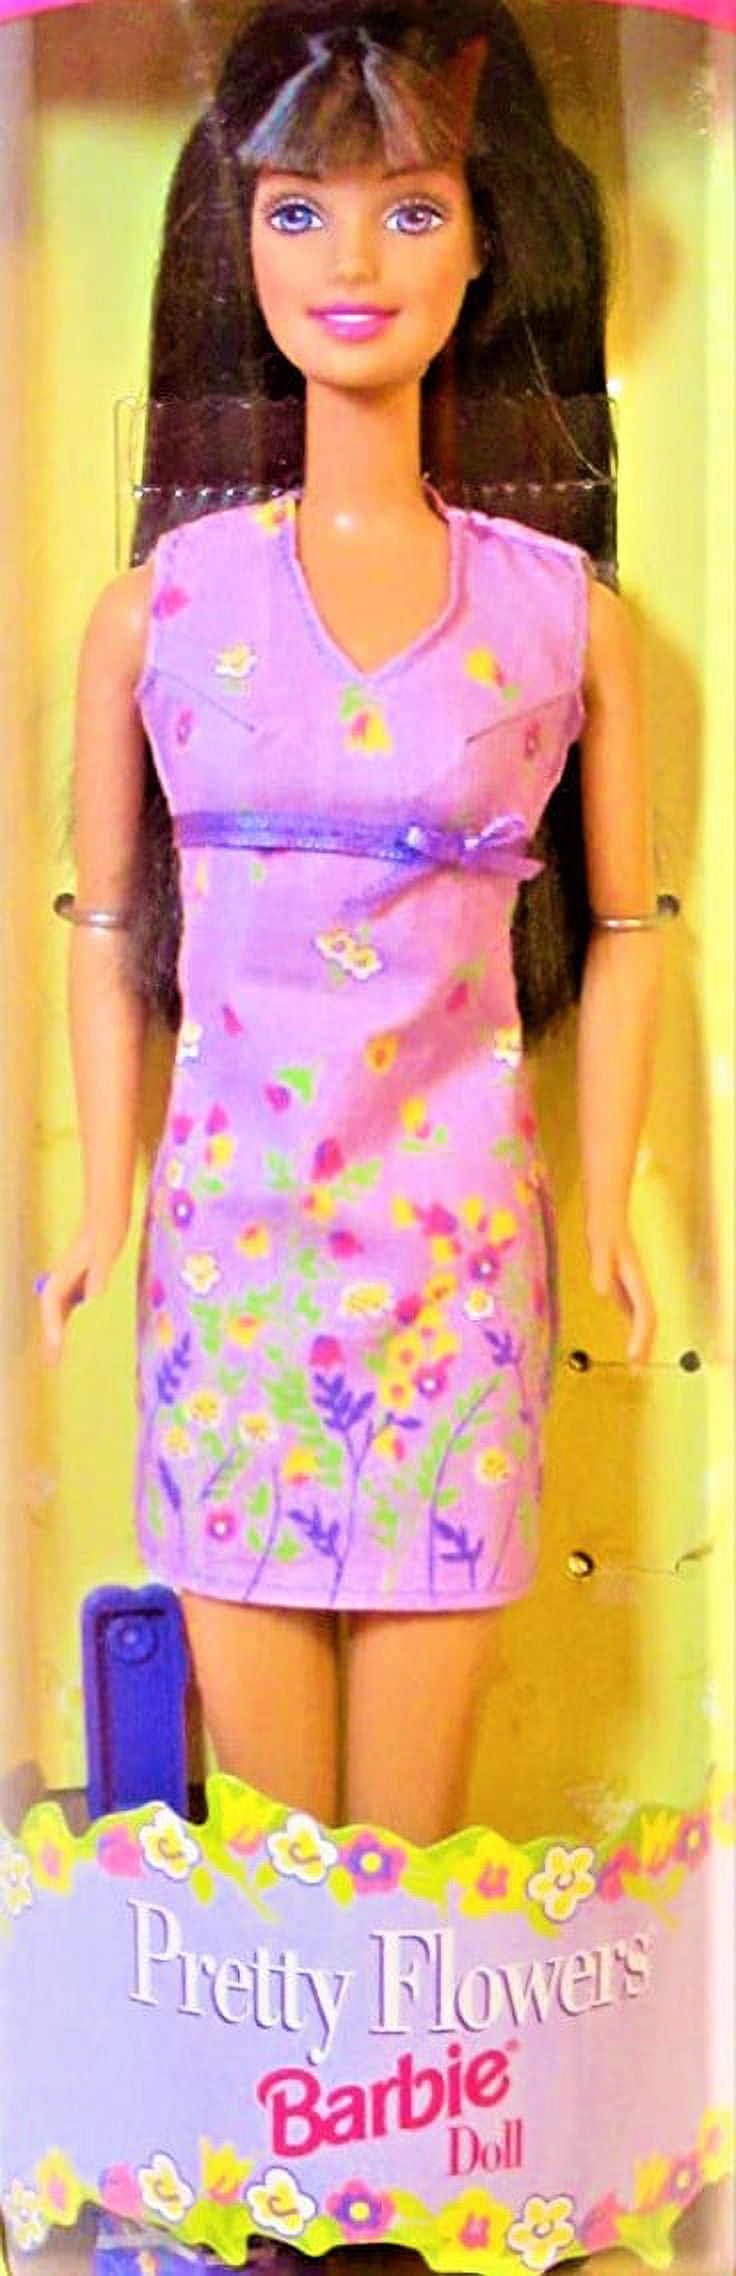 Barbie Pretty Flowers Doll - Walmart.com